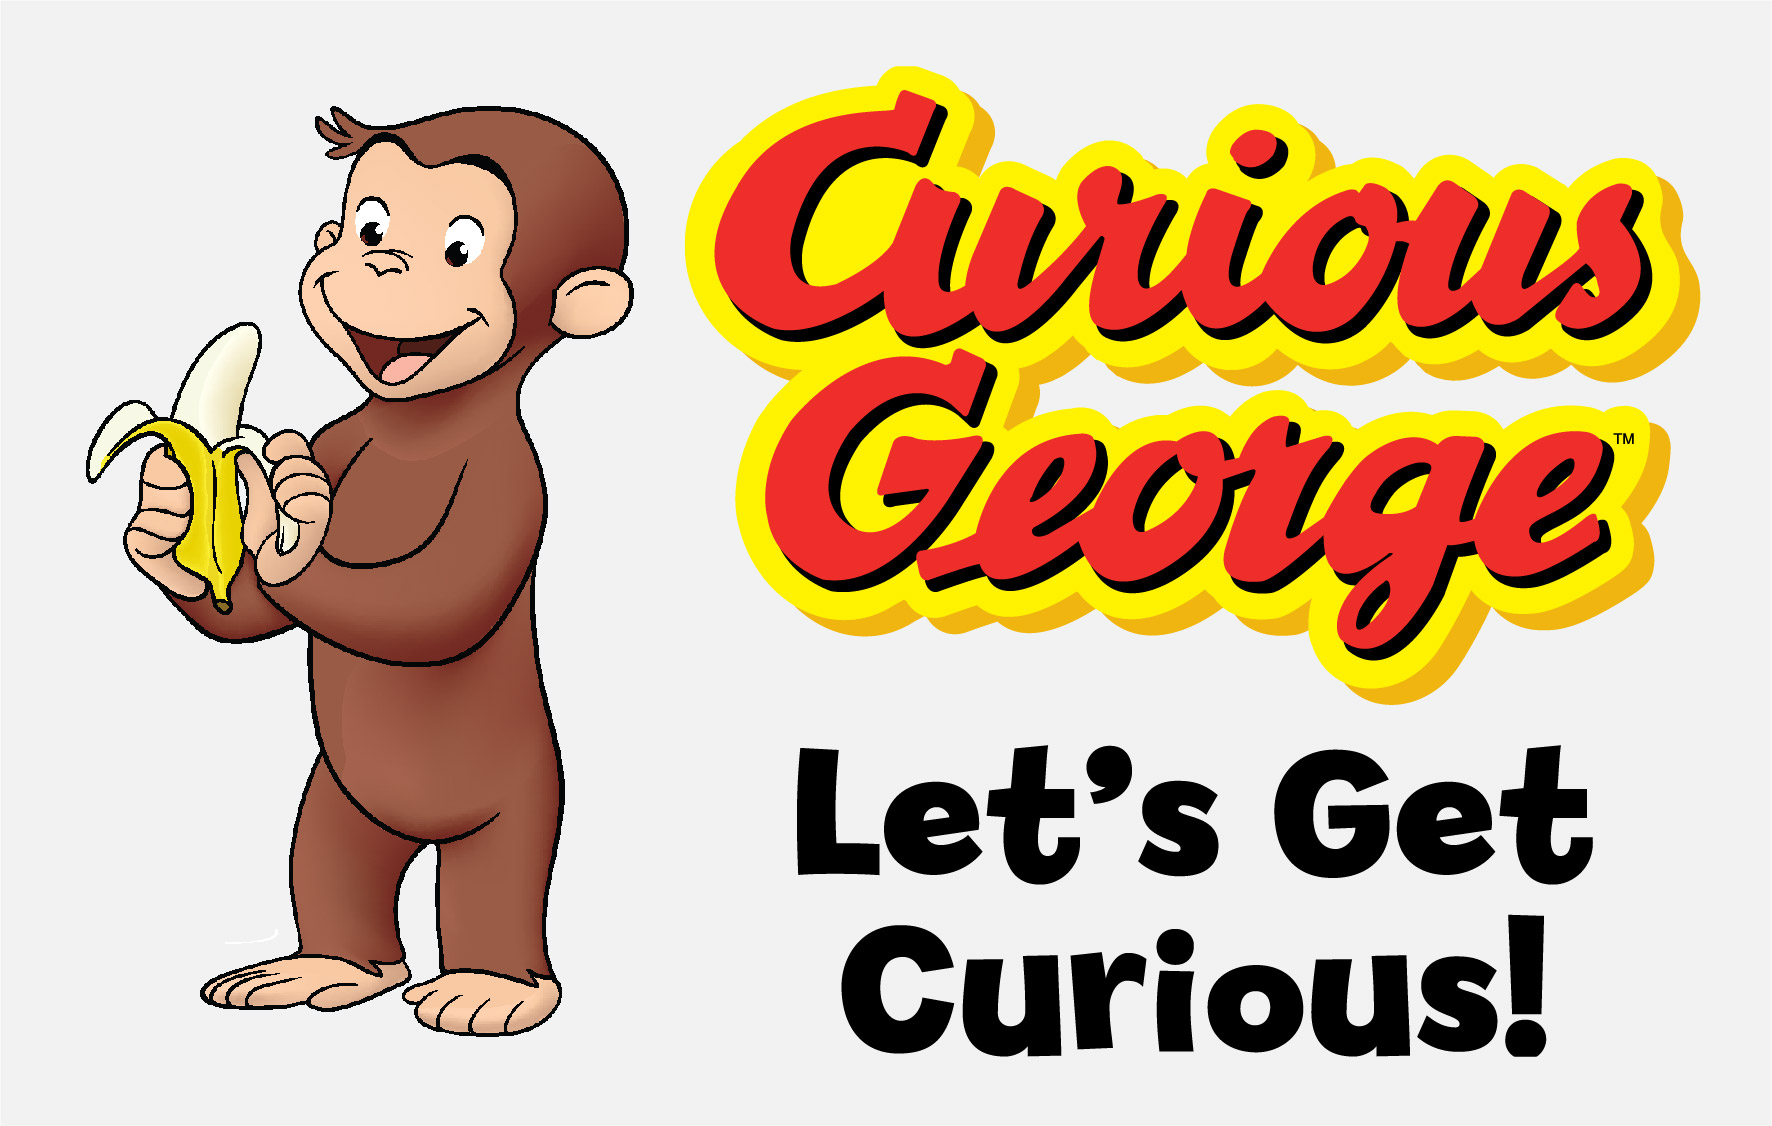 Curious George: Let’s Get Curious!